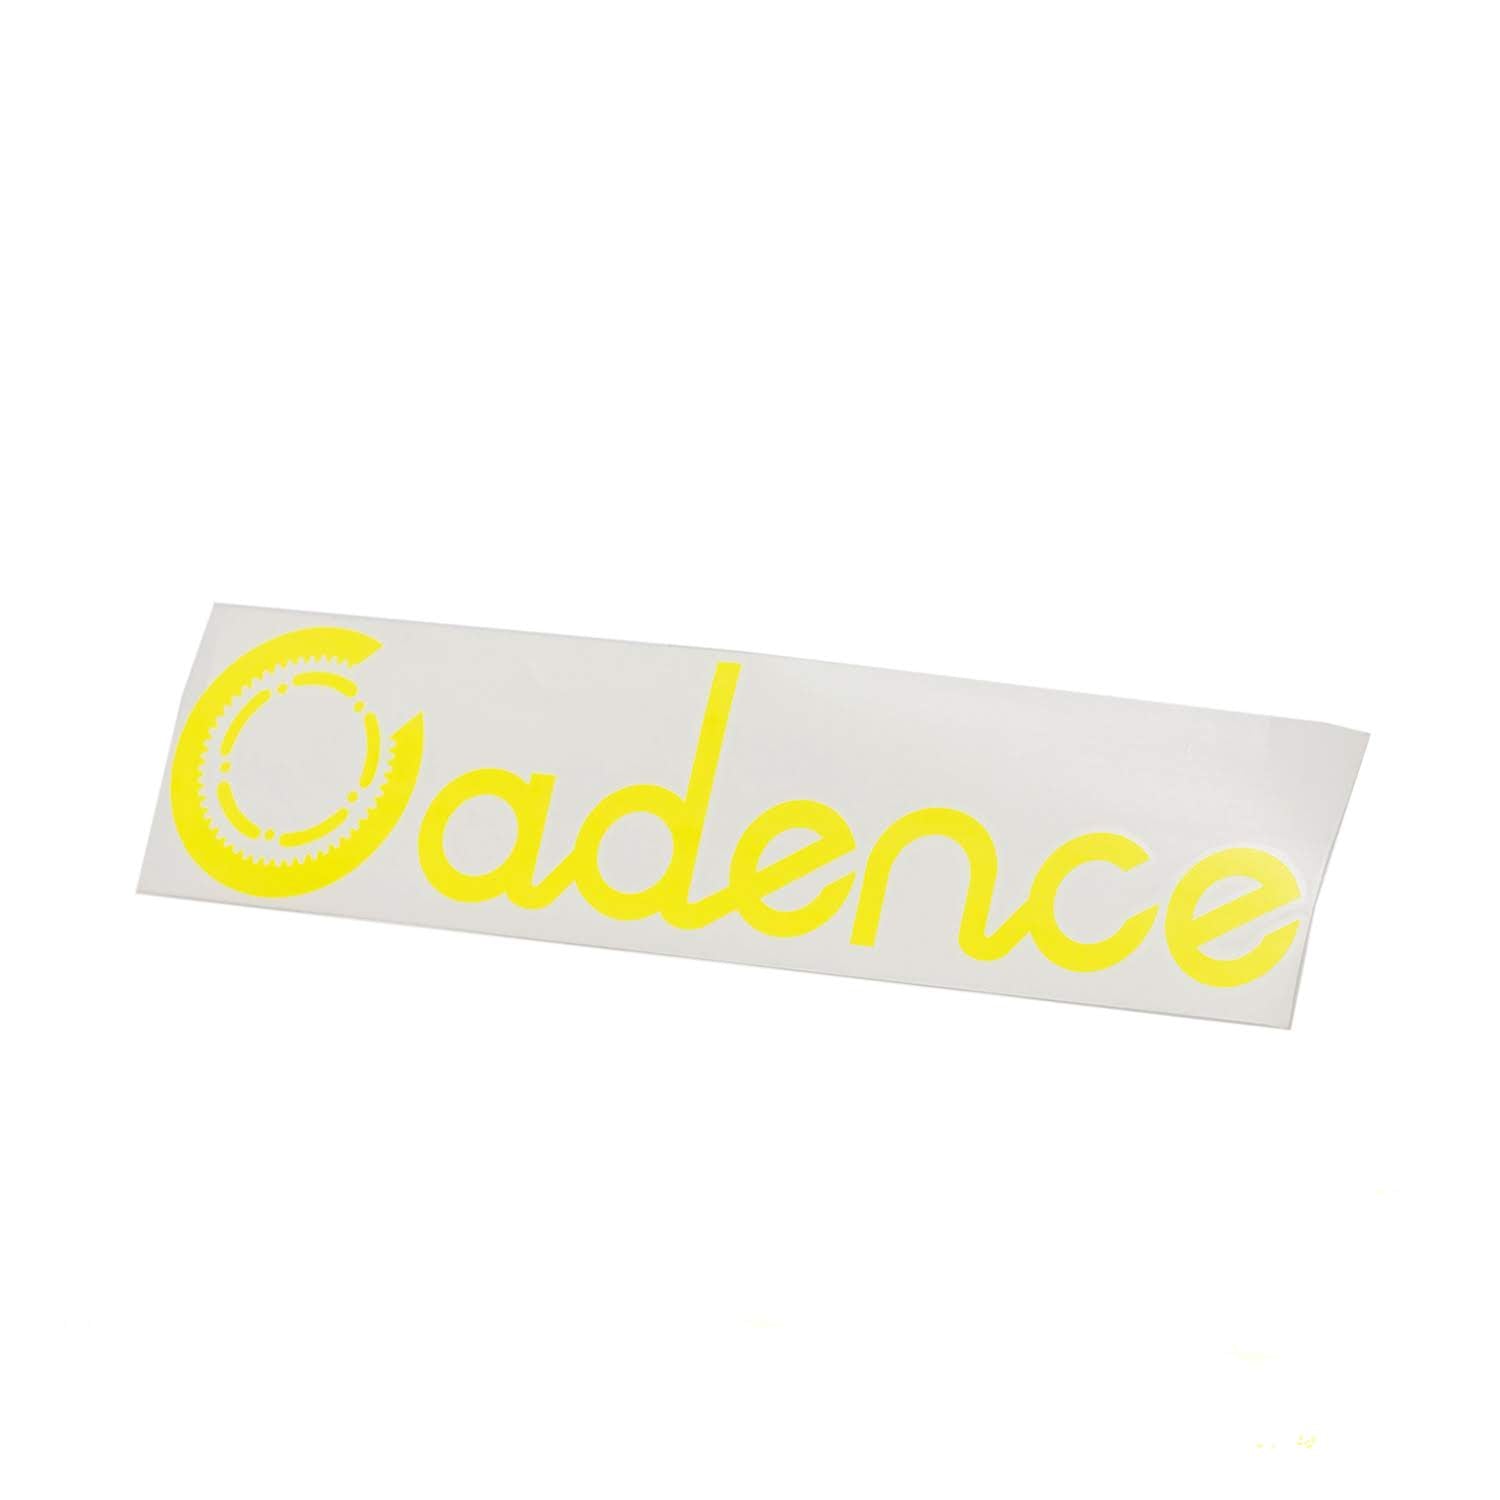 CADENCE 14inch Logo Decal